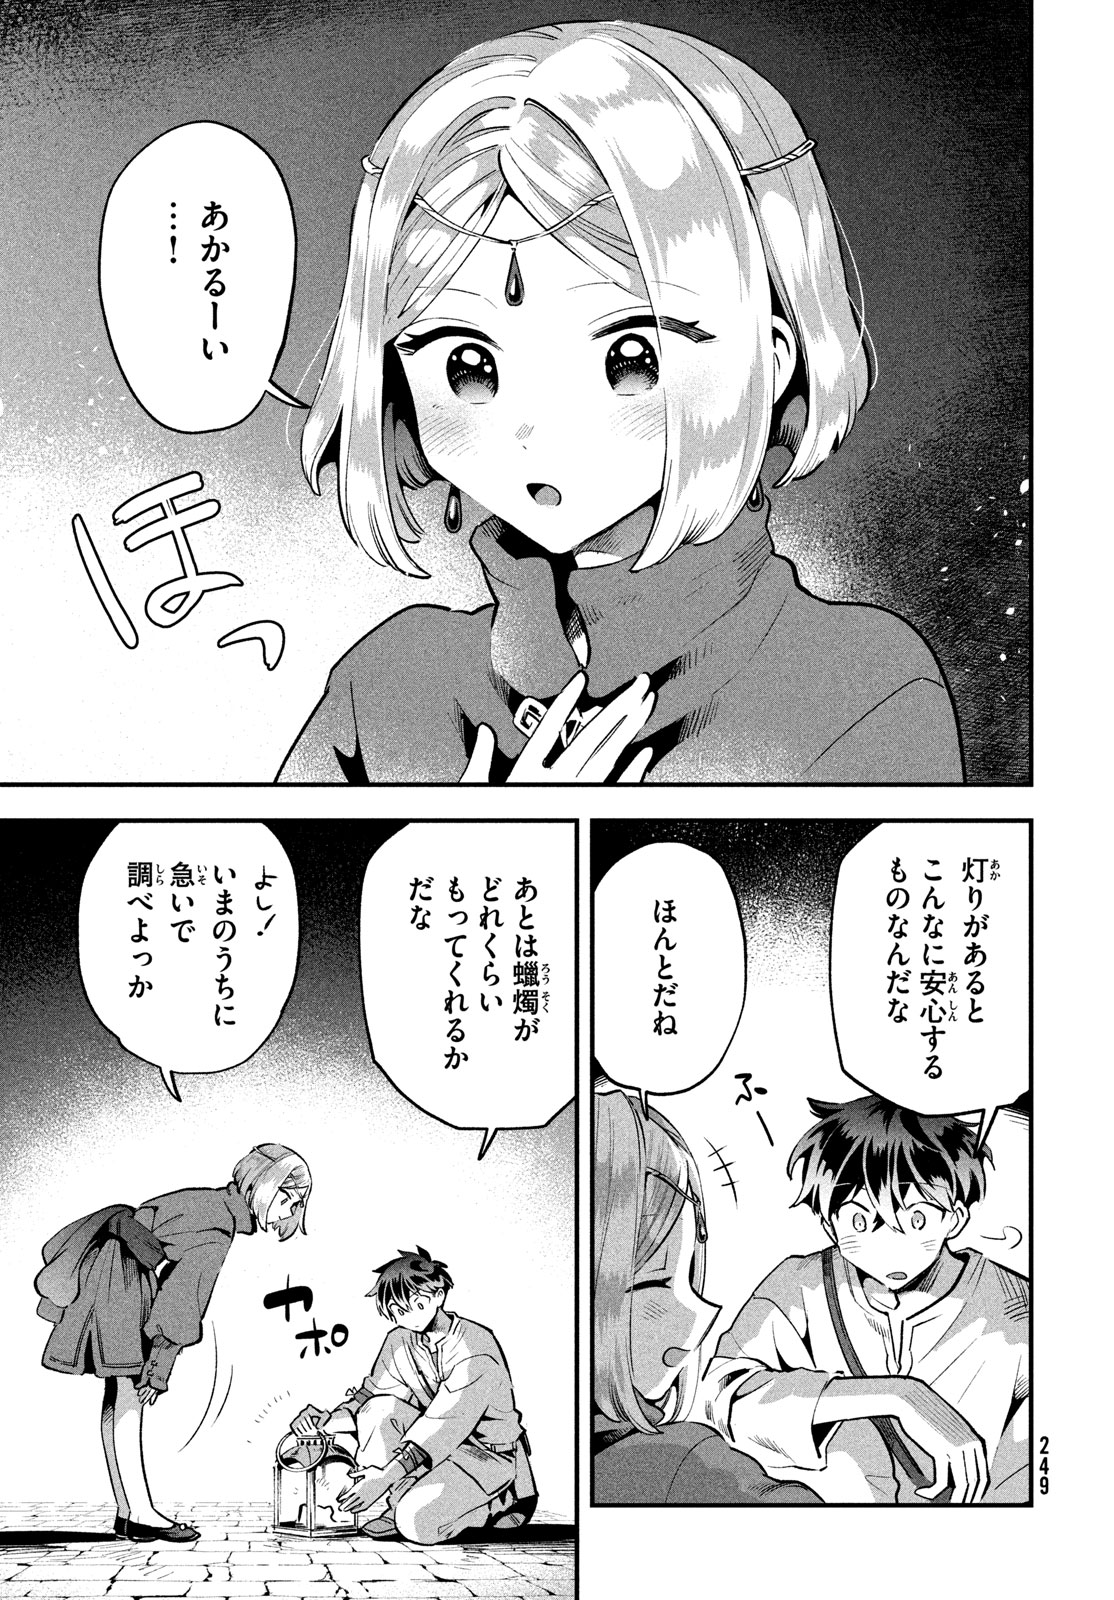 7-nin no Nemuri Hime - Chapter 38 - Page 3